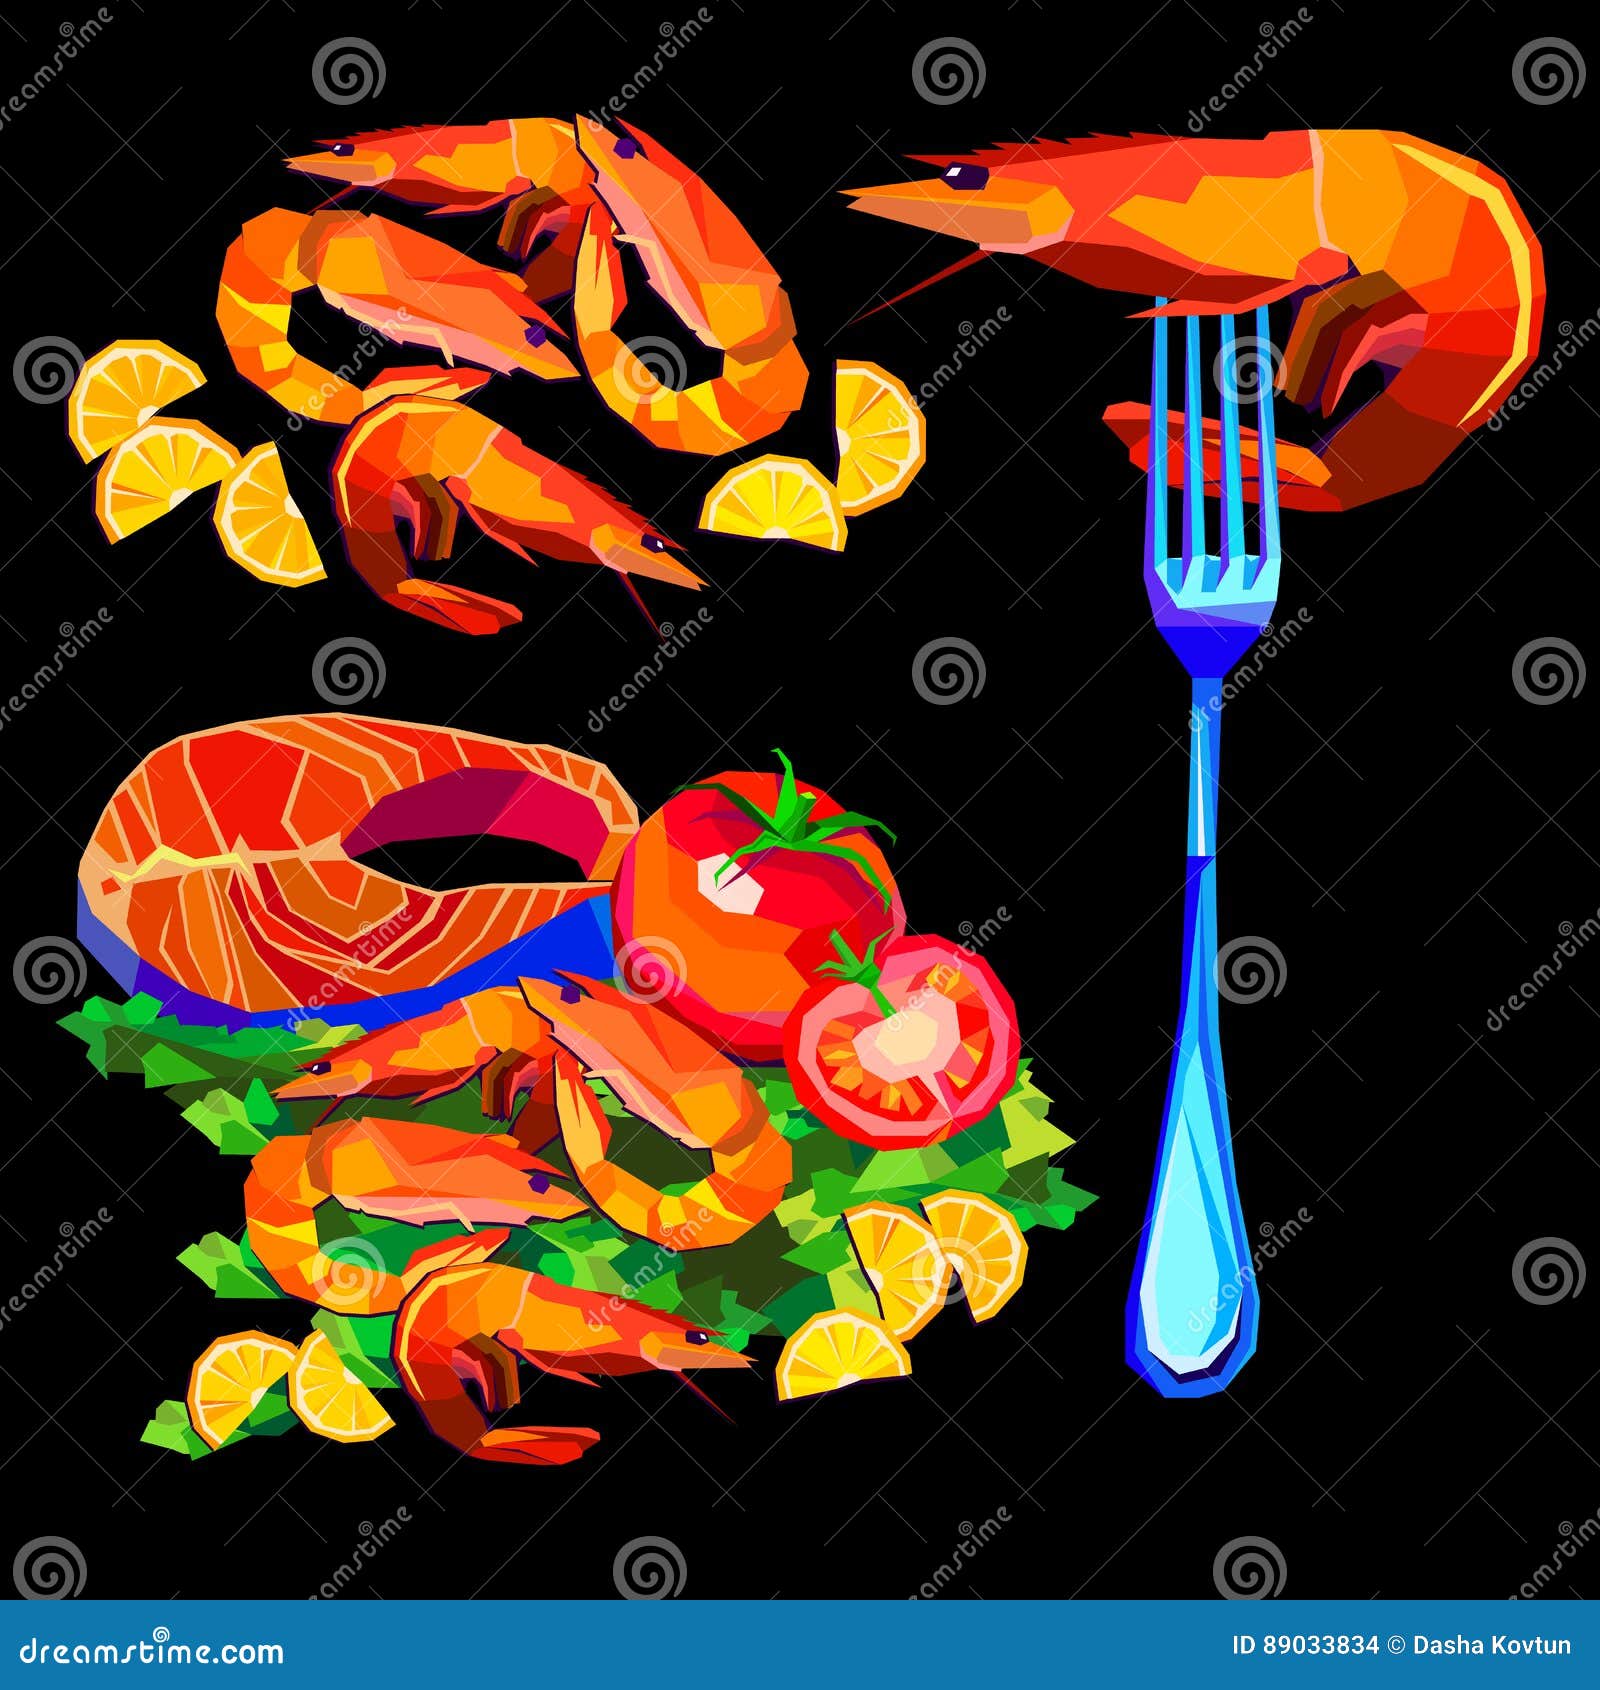 Fish lemon tomato dish seafood shrimp vector salmon illustration tasty